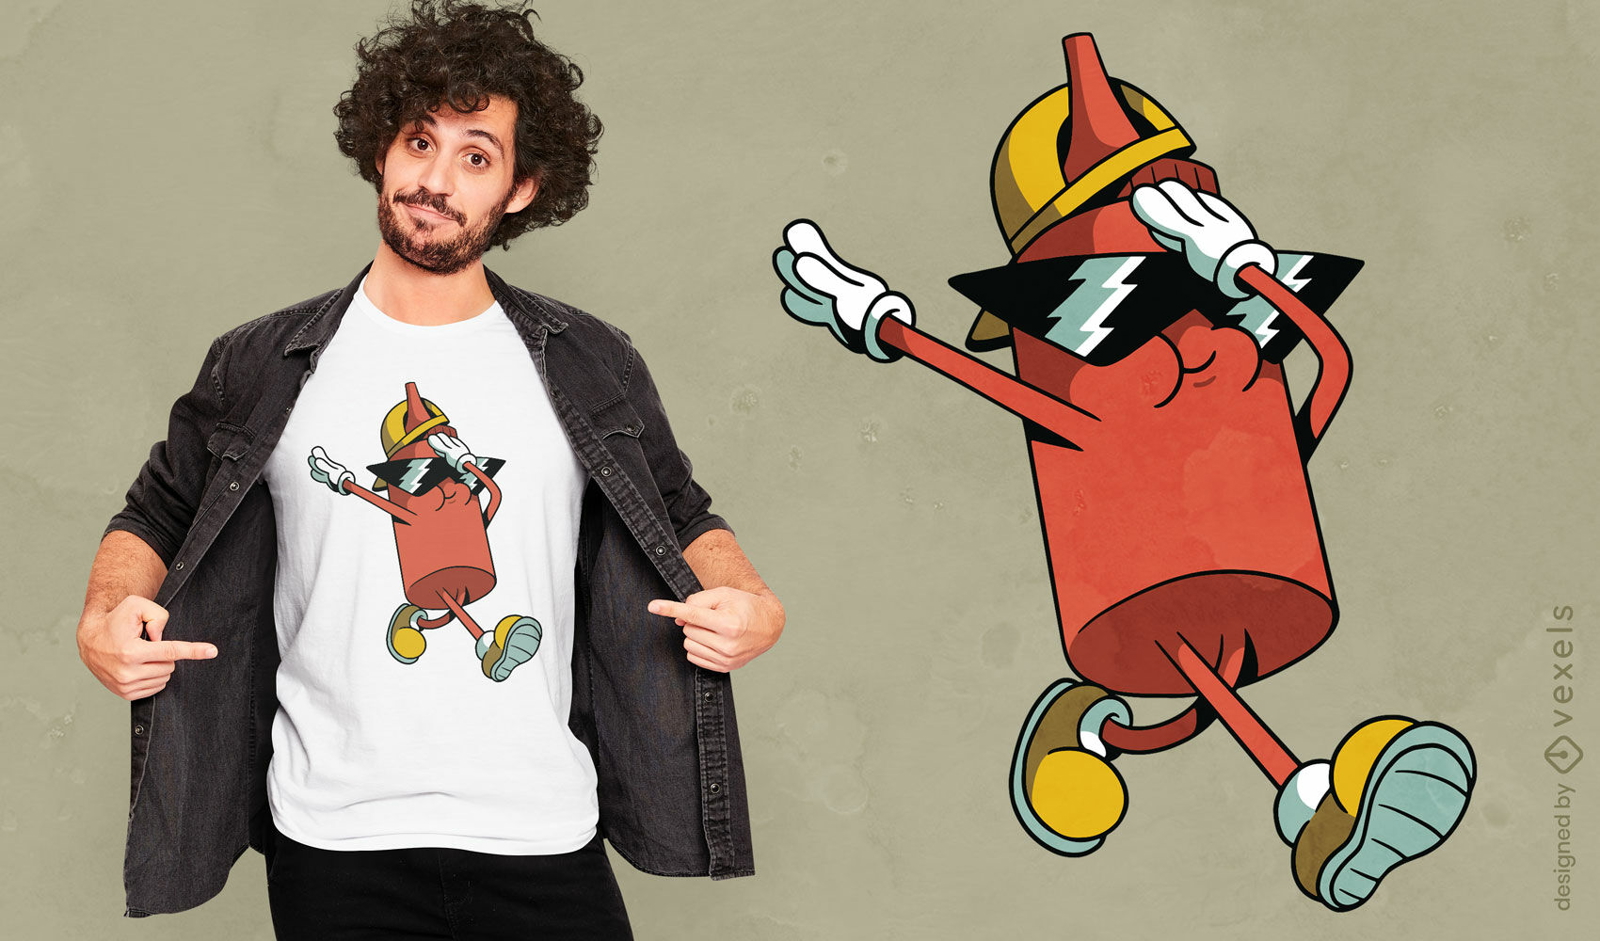 Angesagtes Retro-Cartoon-T-Shirt-Design mit Ketchup